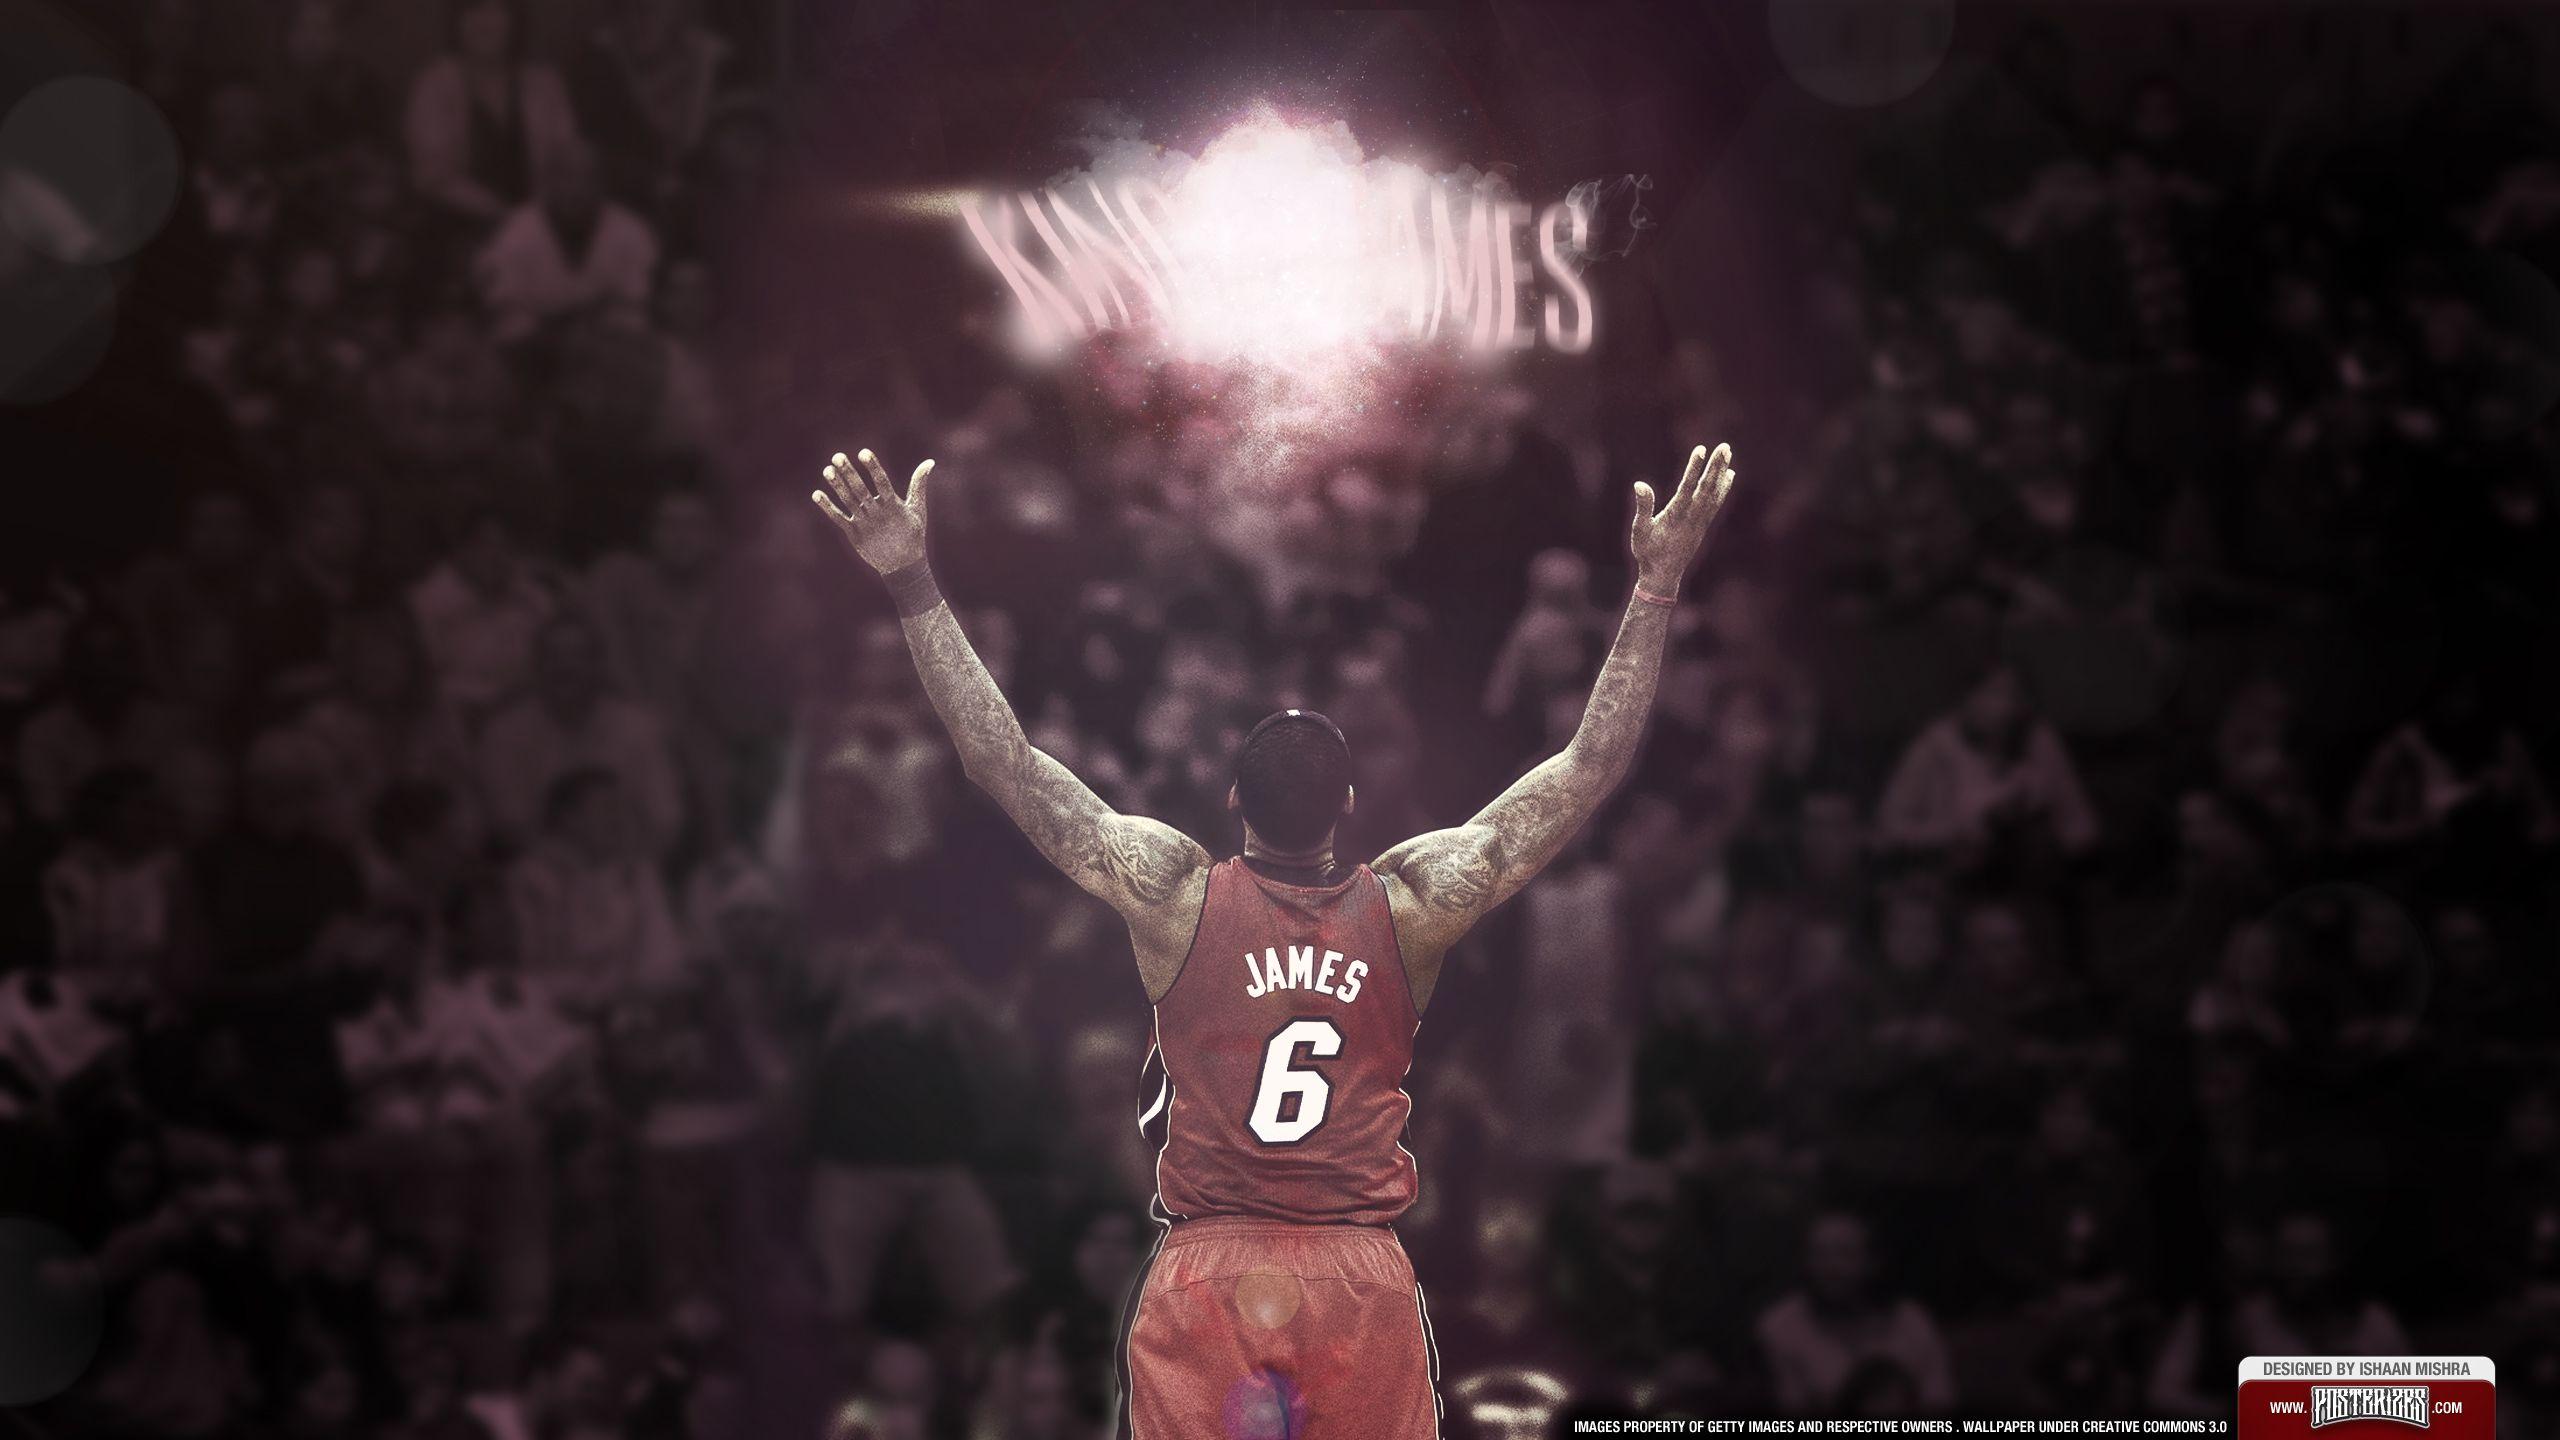 LeBron James 2012 NBA MVP Wallpaper